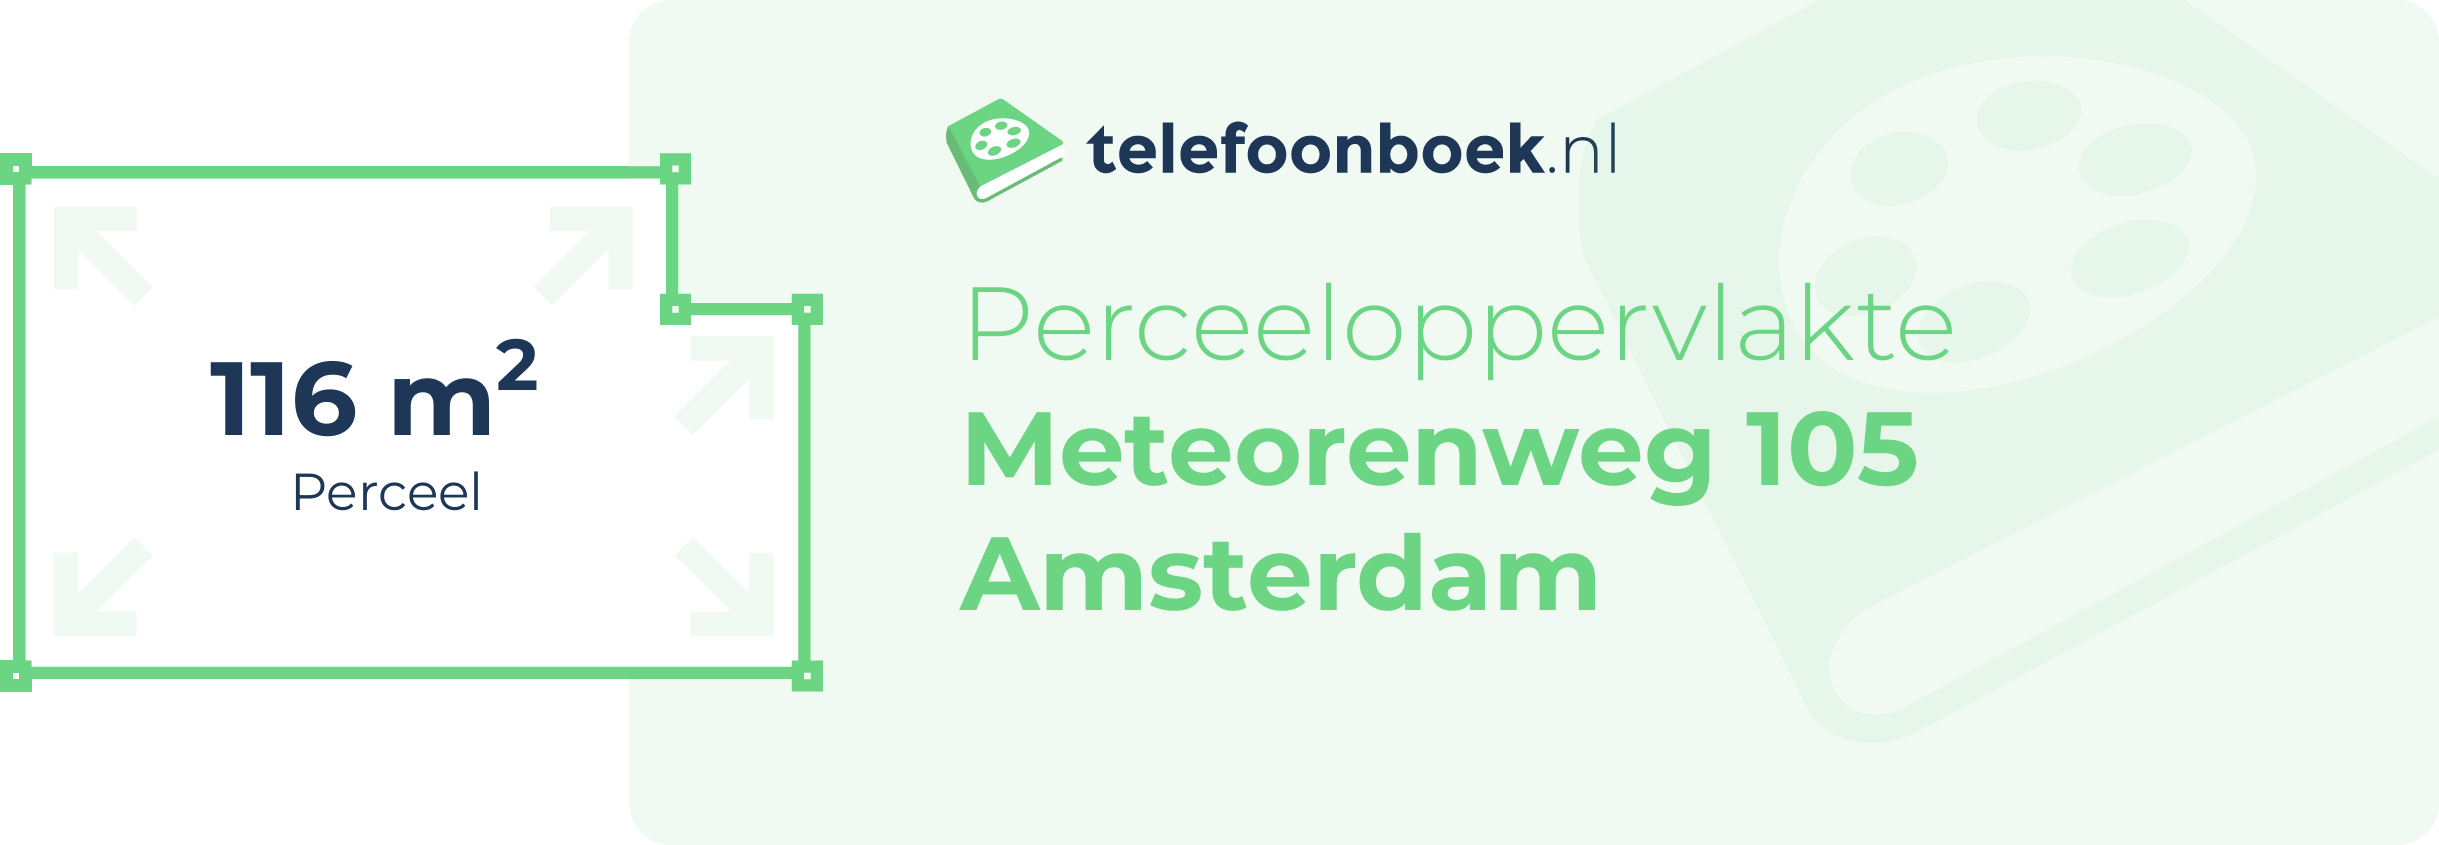 Perceeloppervlakte Meteorenweg 105 Amsterdam